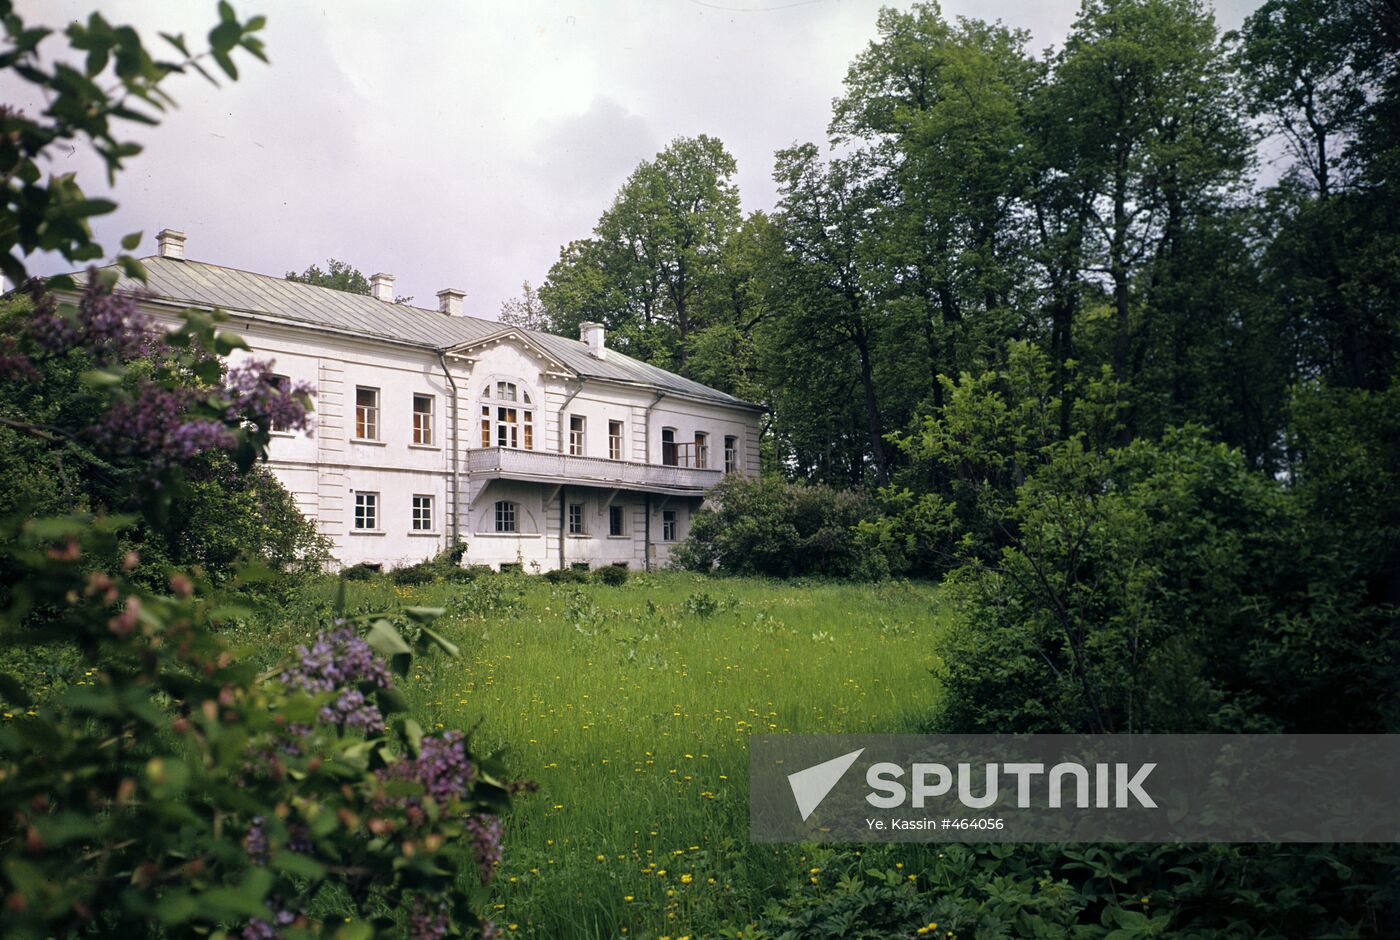 House-museum of Leo Tolstoy